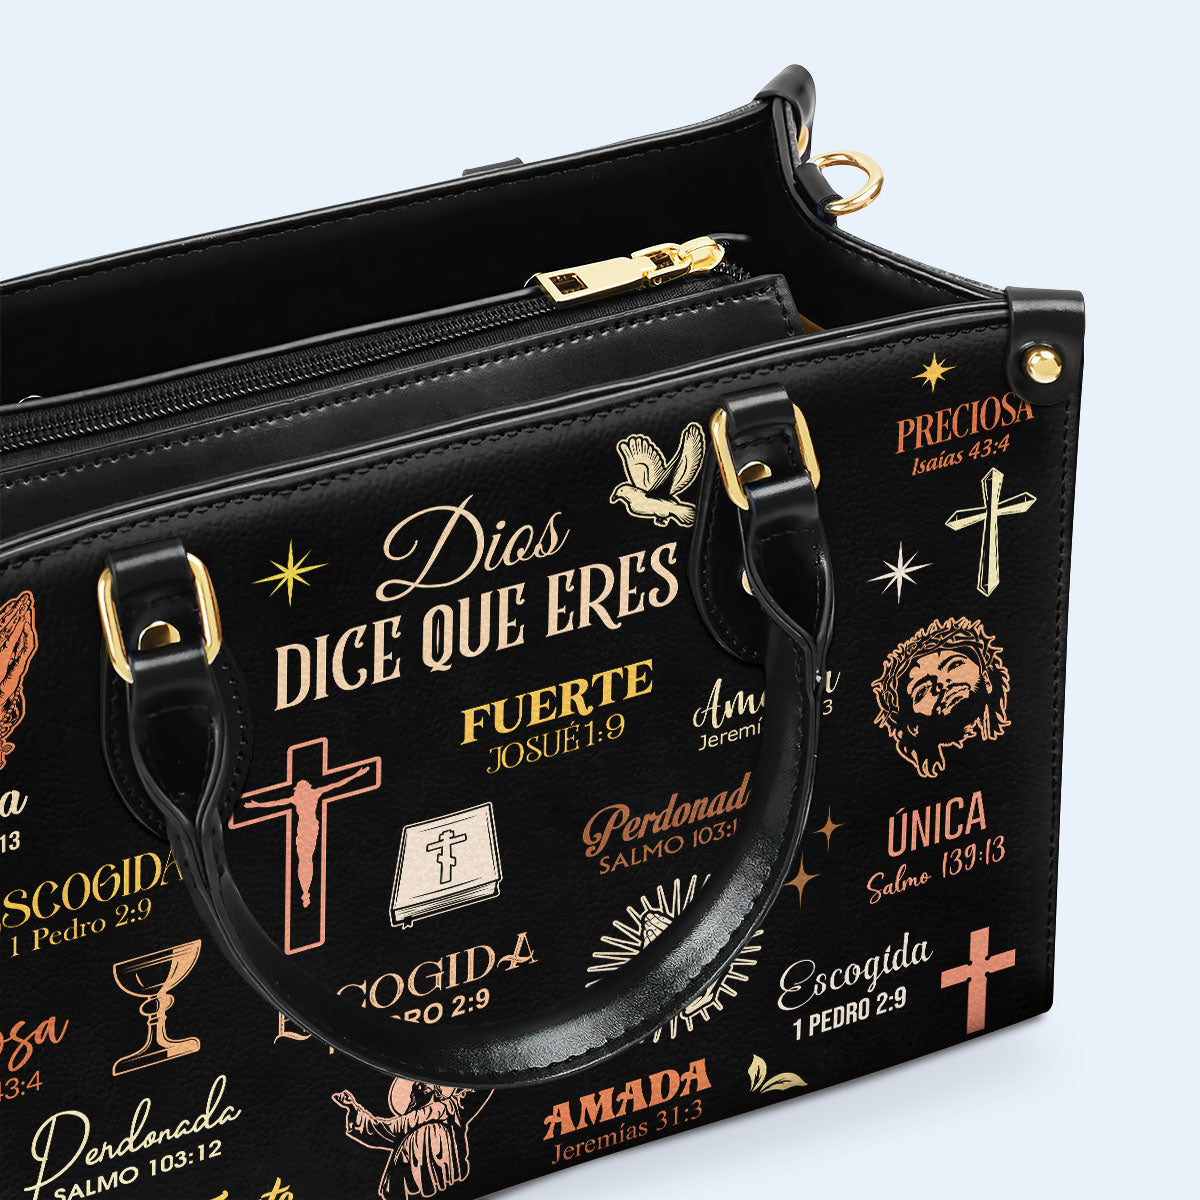 Dios Dice Que Eres - Personalized Leather Handbag - HG66